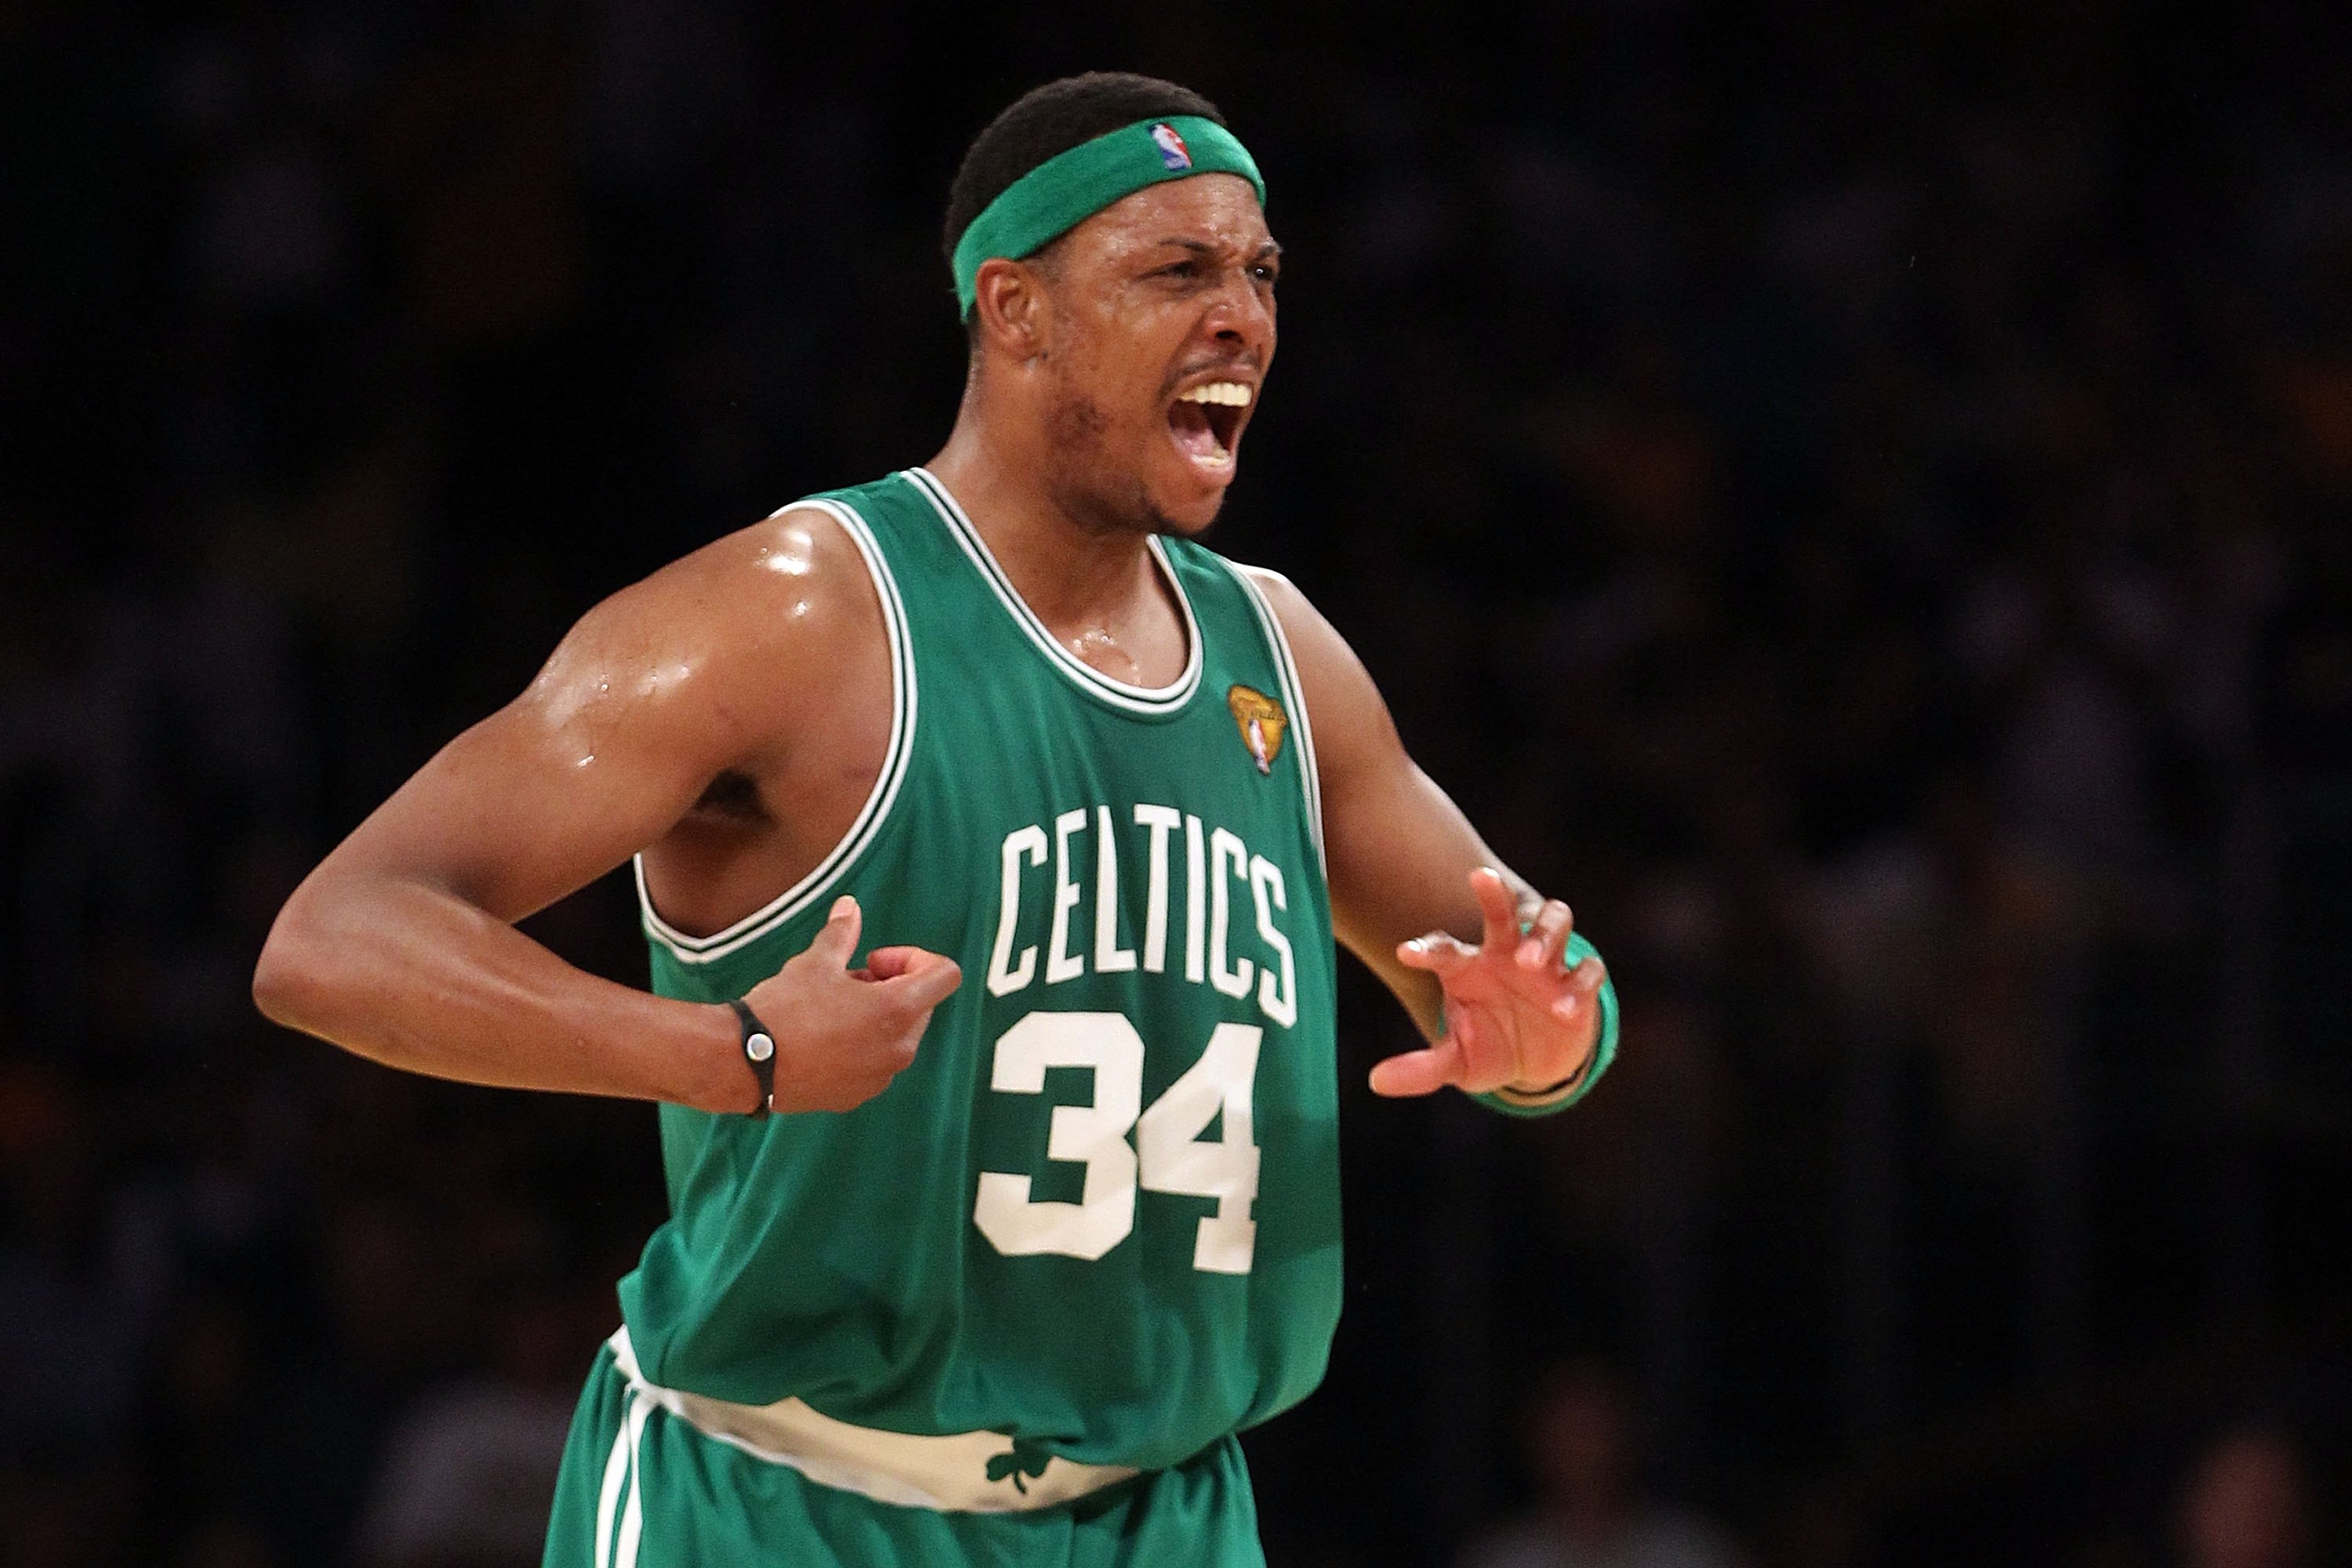 Celtics: Paul Pierce better than Larry Bird on offense, Robert Parish says